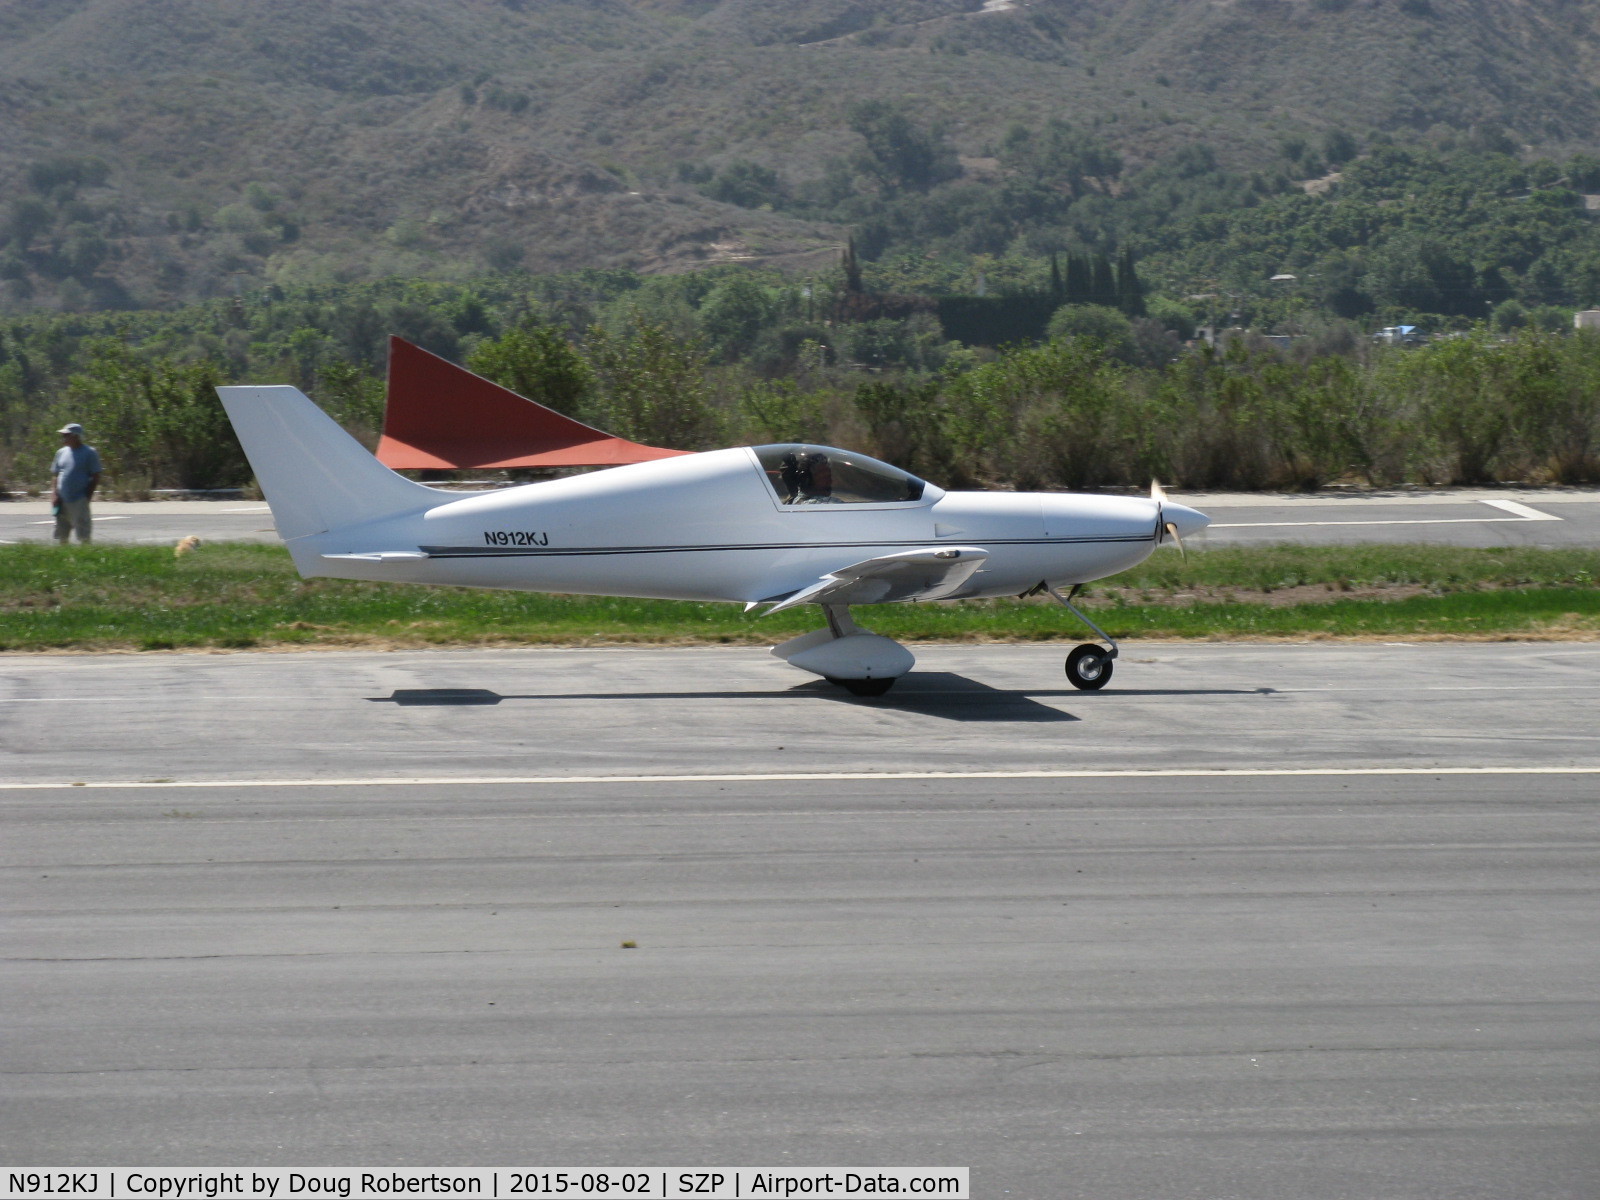 N912KJ, 2000 Aero Designs Pulsar XP912 C/N 349, 2000 Goodwin Aero Designs PULSAR 912XP, Rotax 912 100 Hp, landing roll Rwy 22